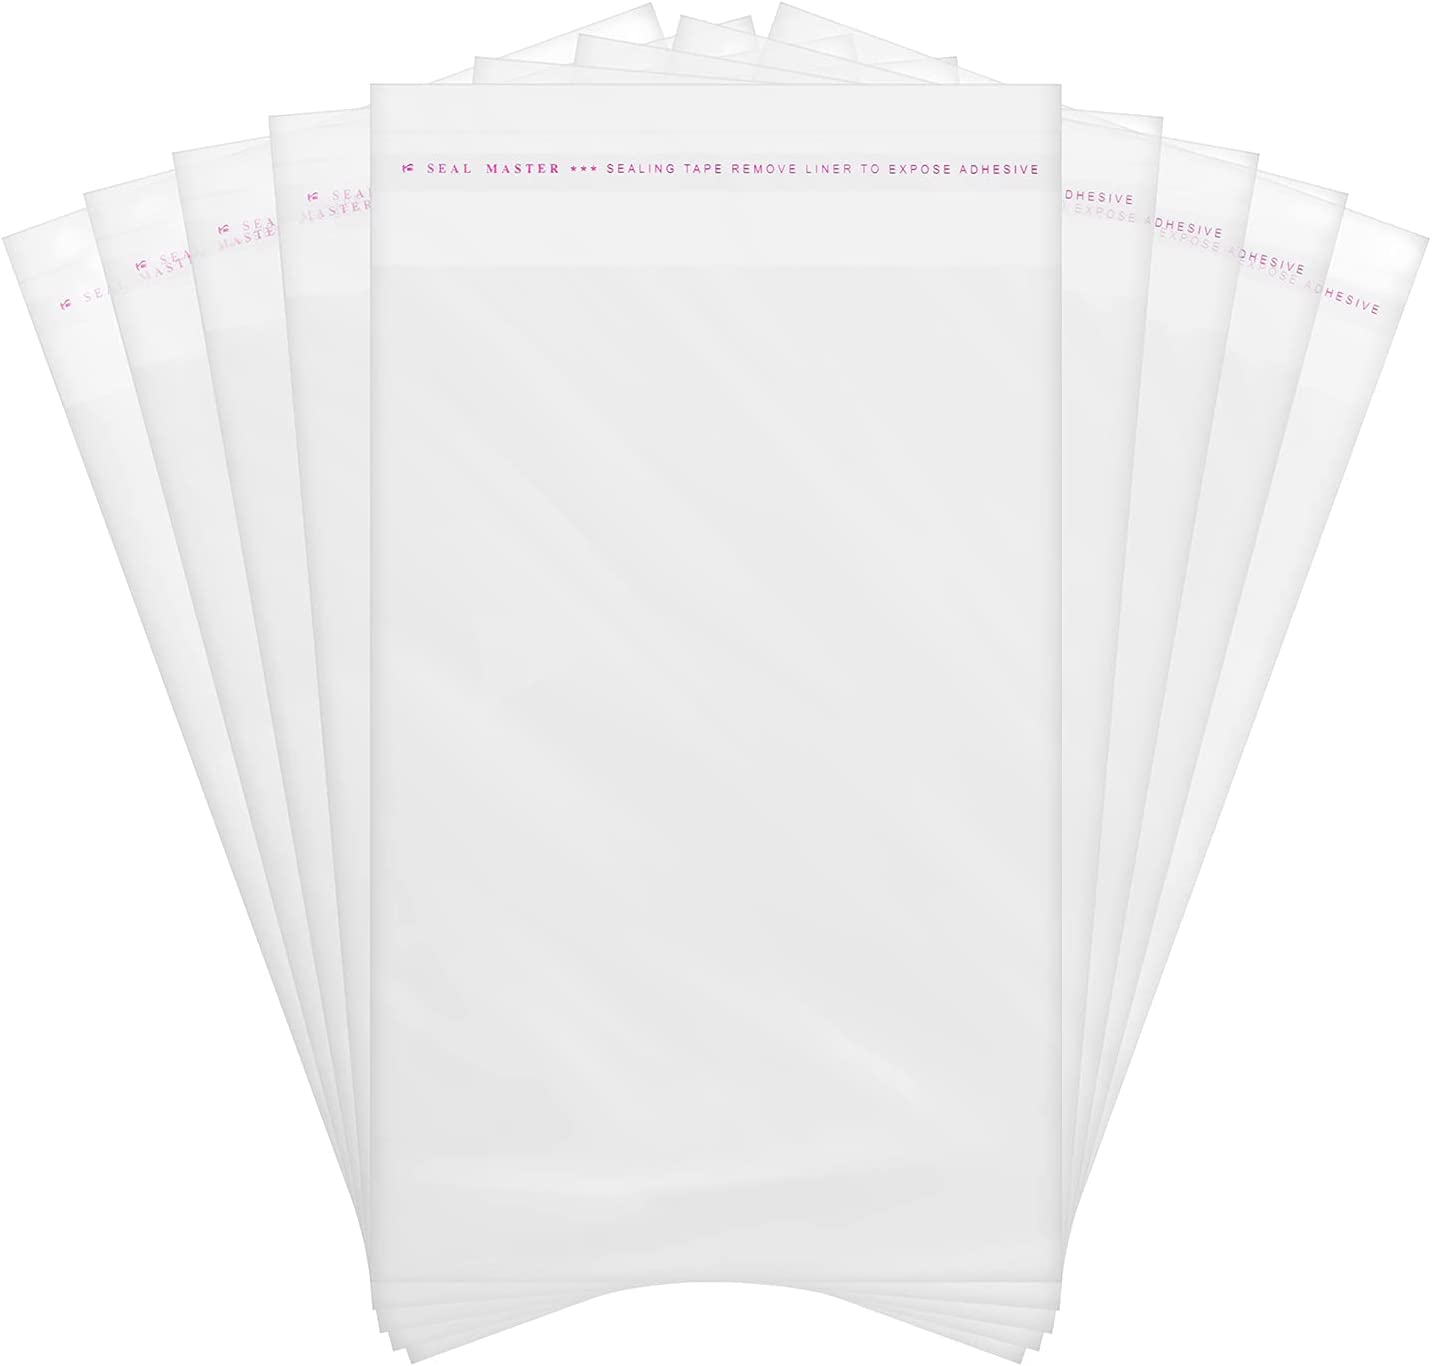 4 x 5 1/2 Bulk 150 Pc. Small Clear Cellophane Gift Bags